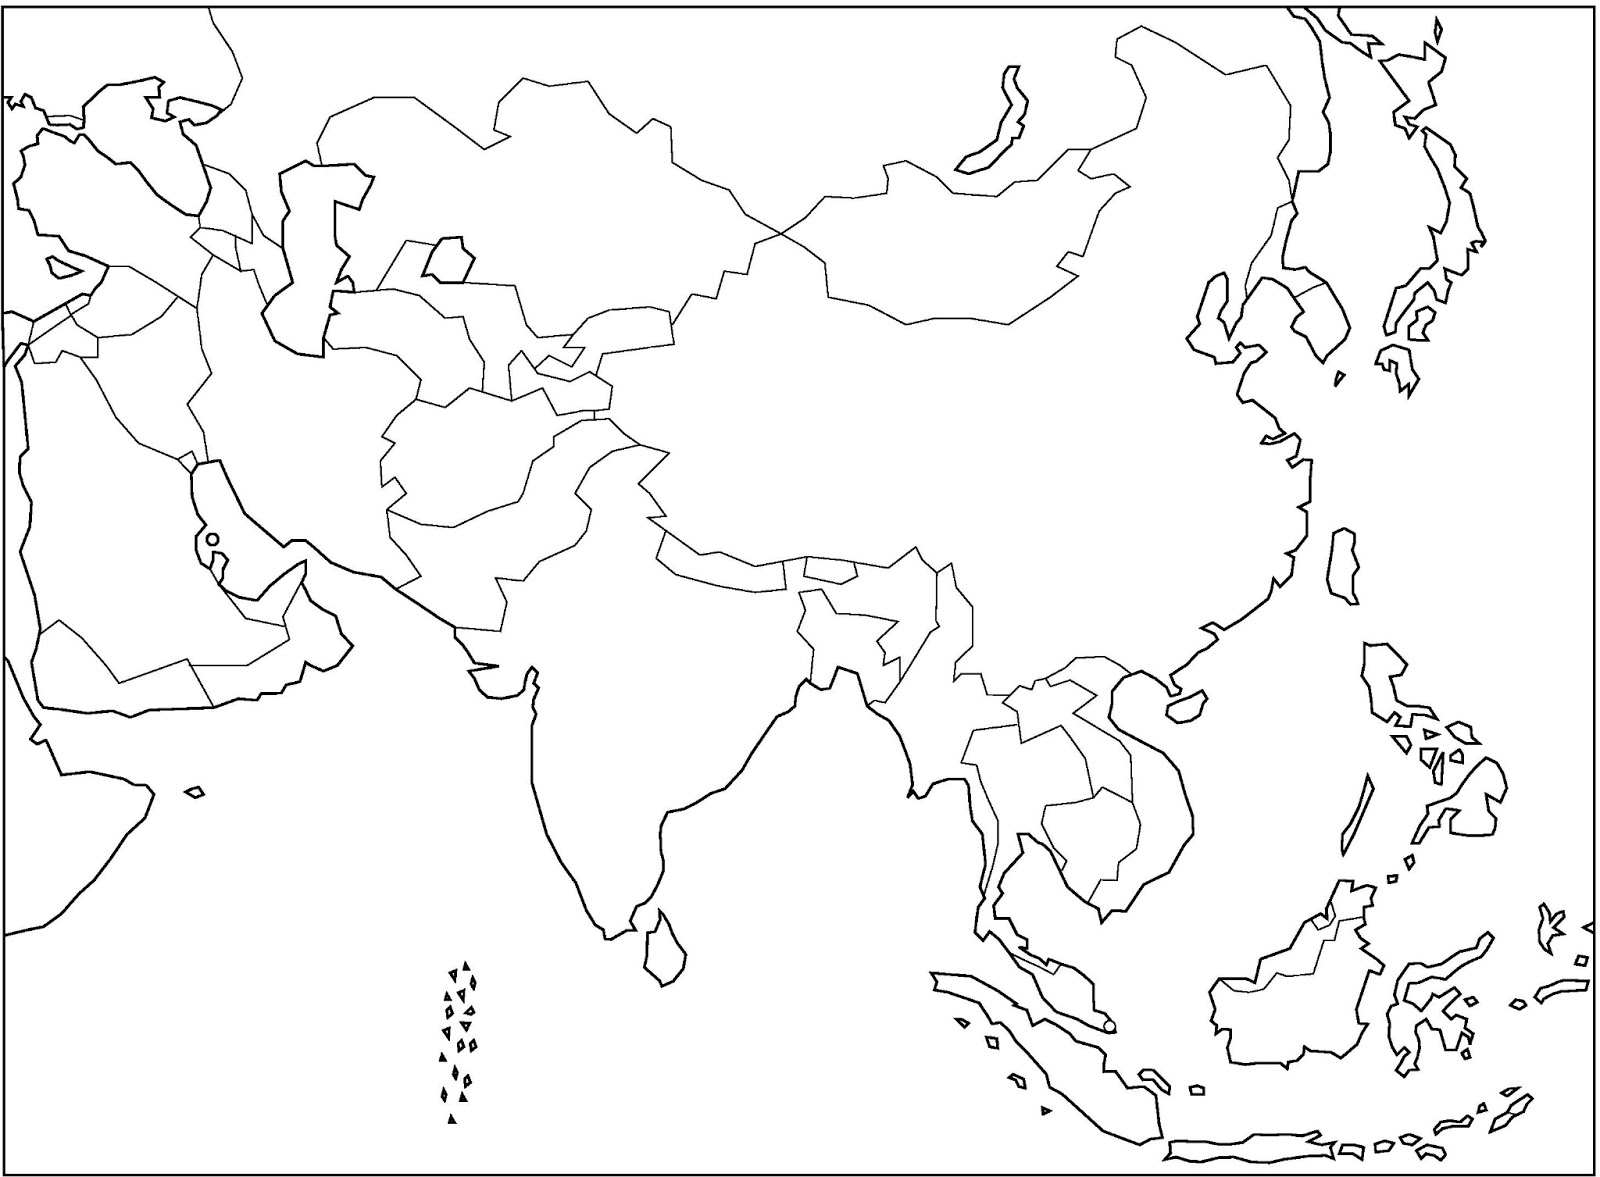 Atlas Geogr Fico Asia